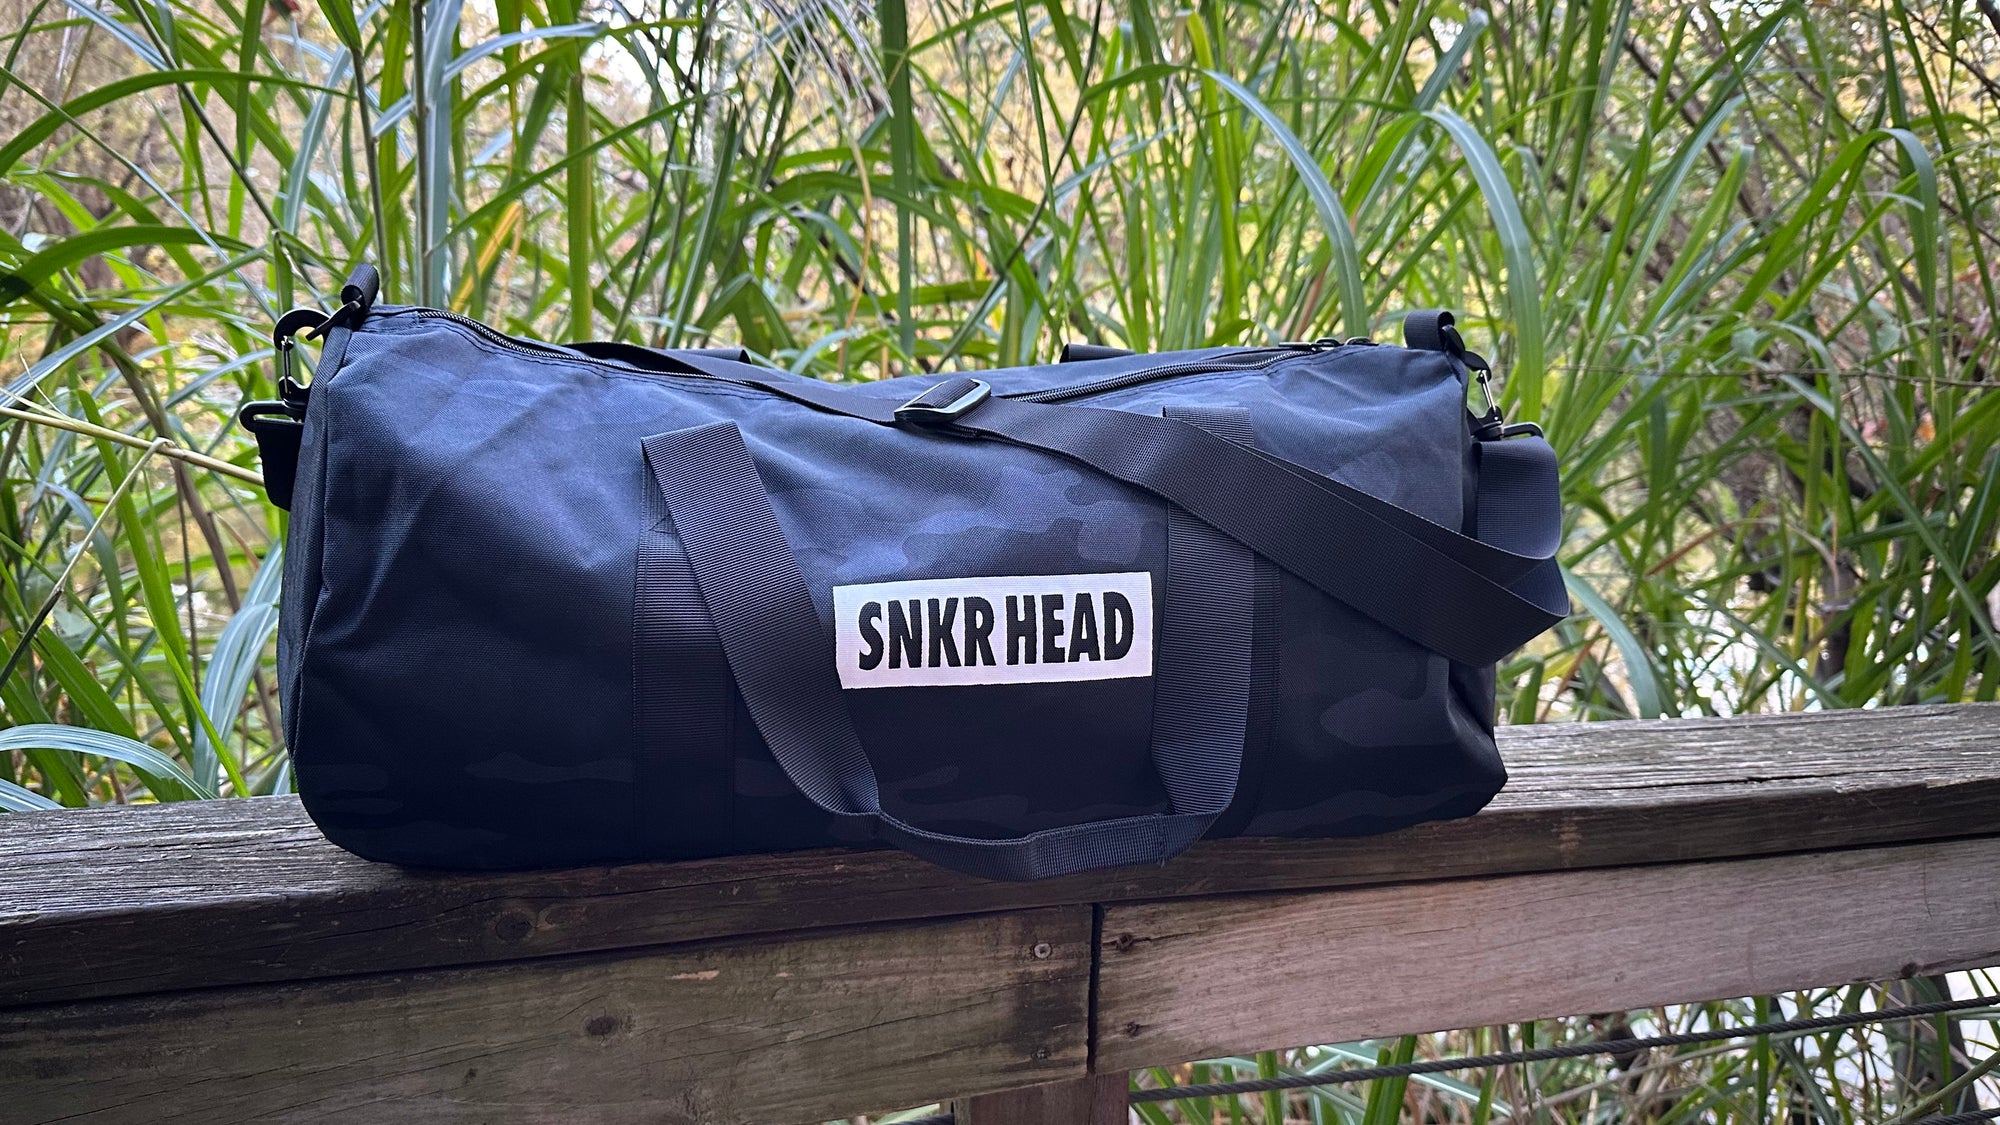 SNKRHEAD Black Camo Duffle Bag